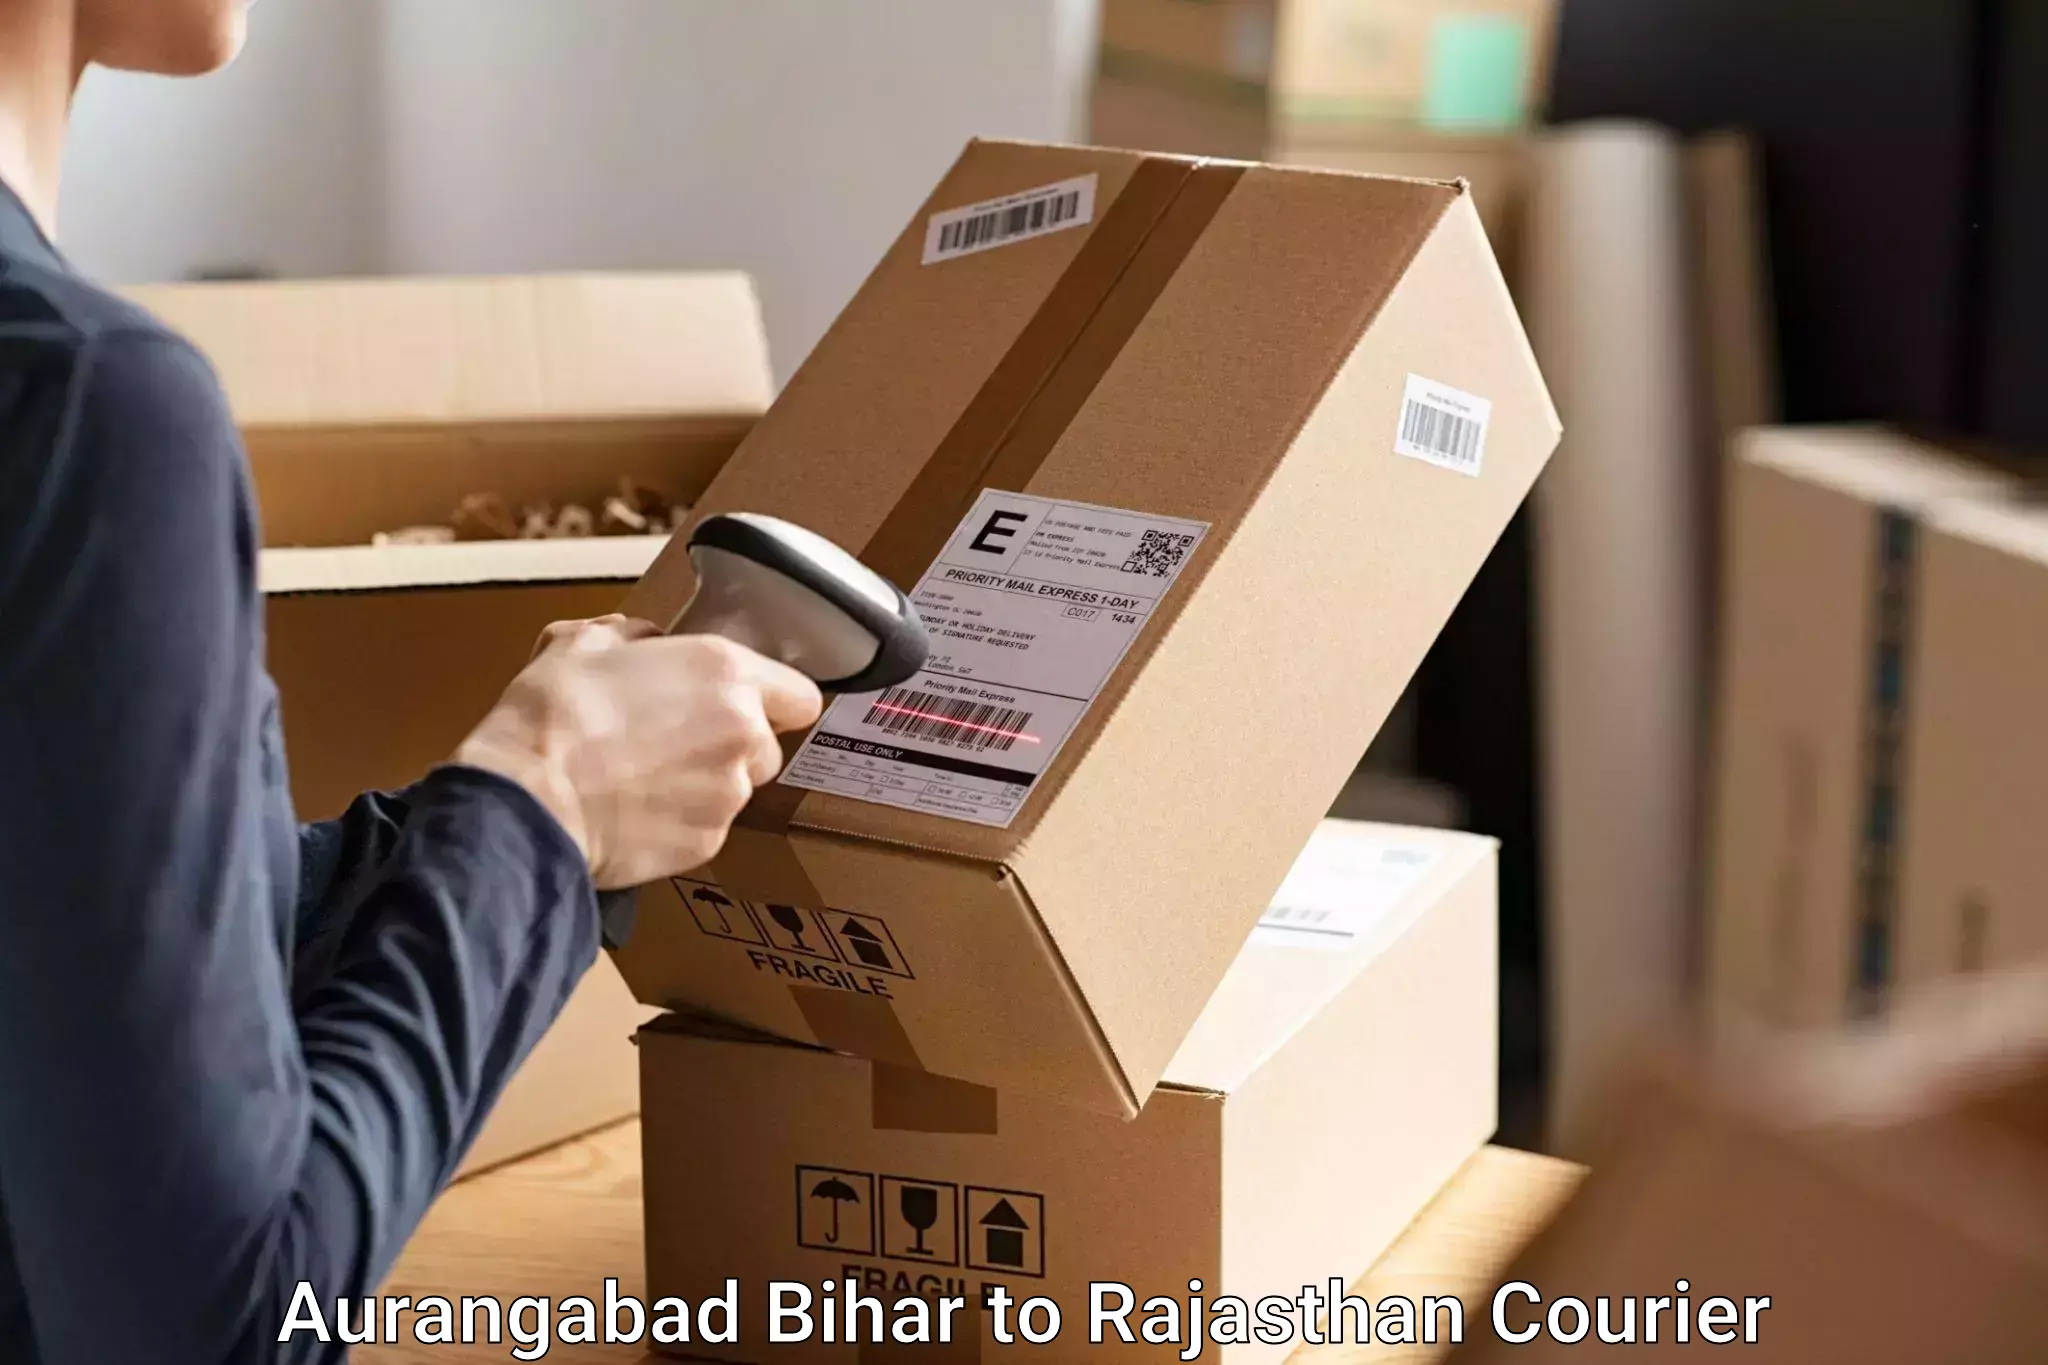 Baggage relocation service Aurangabad Bihar to Achrol